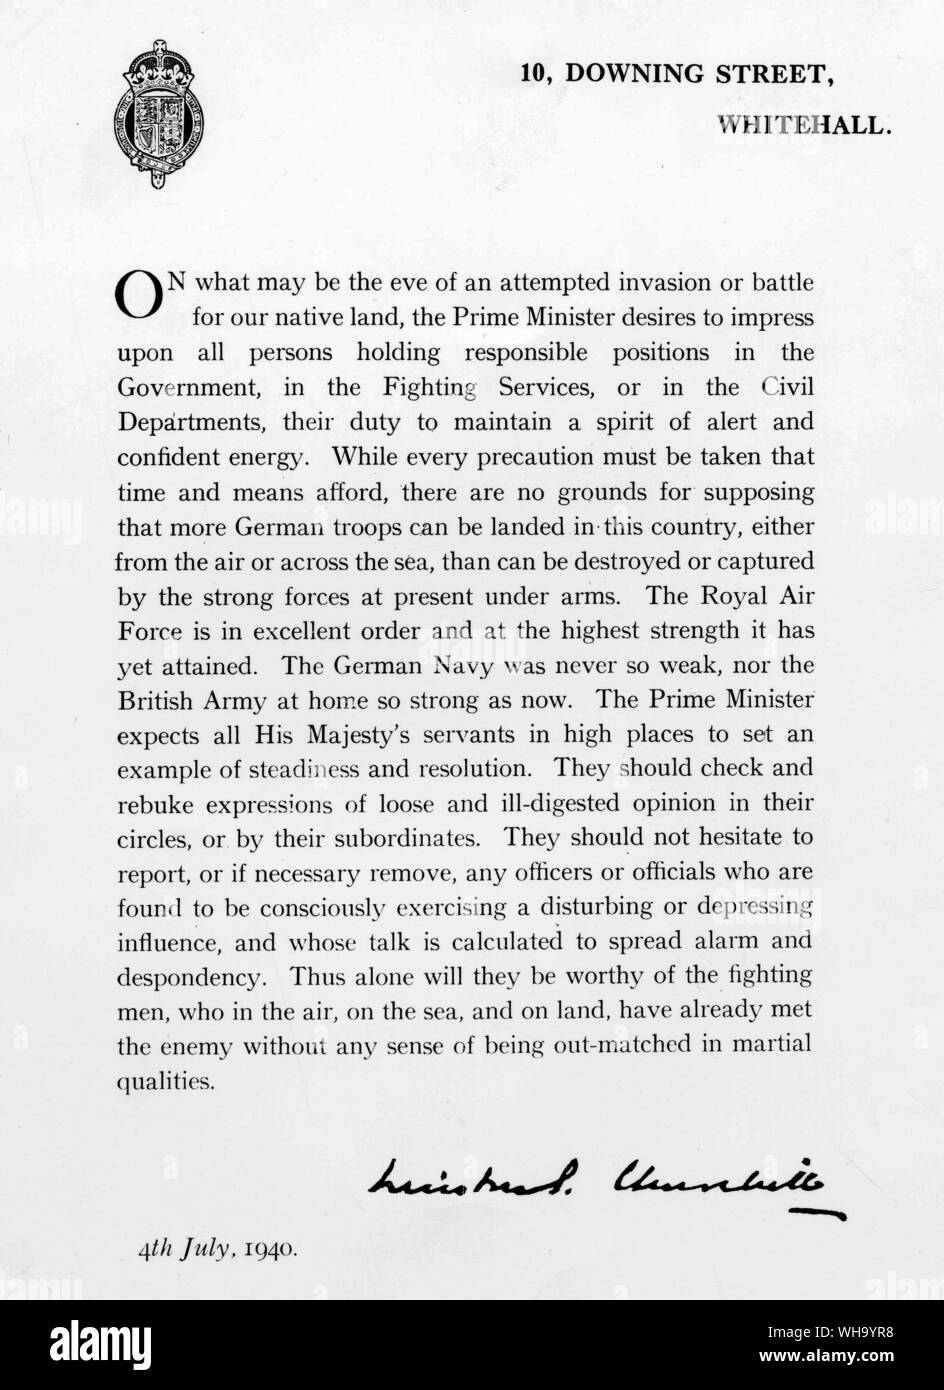 WW2: Brief von Winston Churchill am 10 Downing Street, 4. Juli 1940. Stockfoto